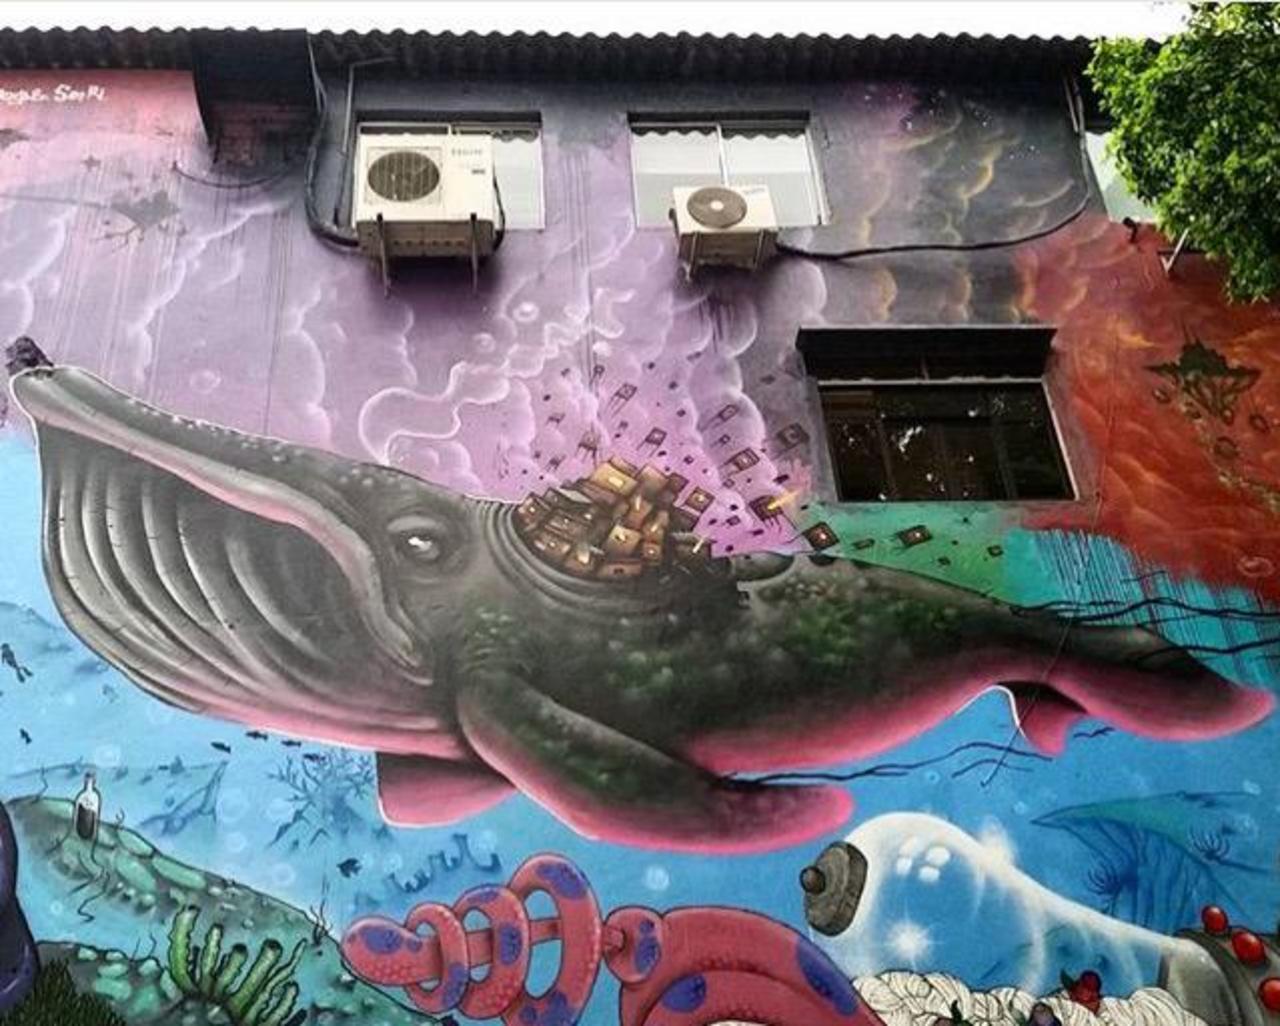 Street Art by joks_johnes Pinheiros, São Paulo 

#art #mural #graffiti #streetart http://t.co/93X9tvrlk2